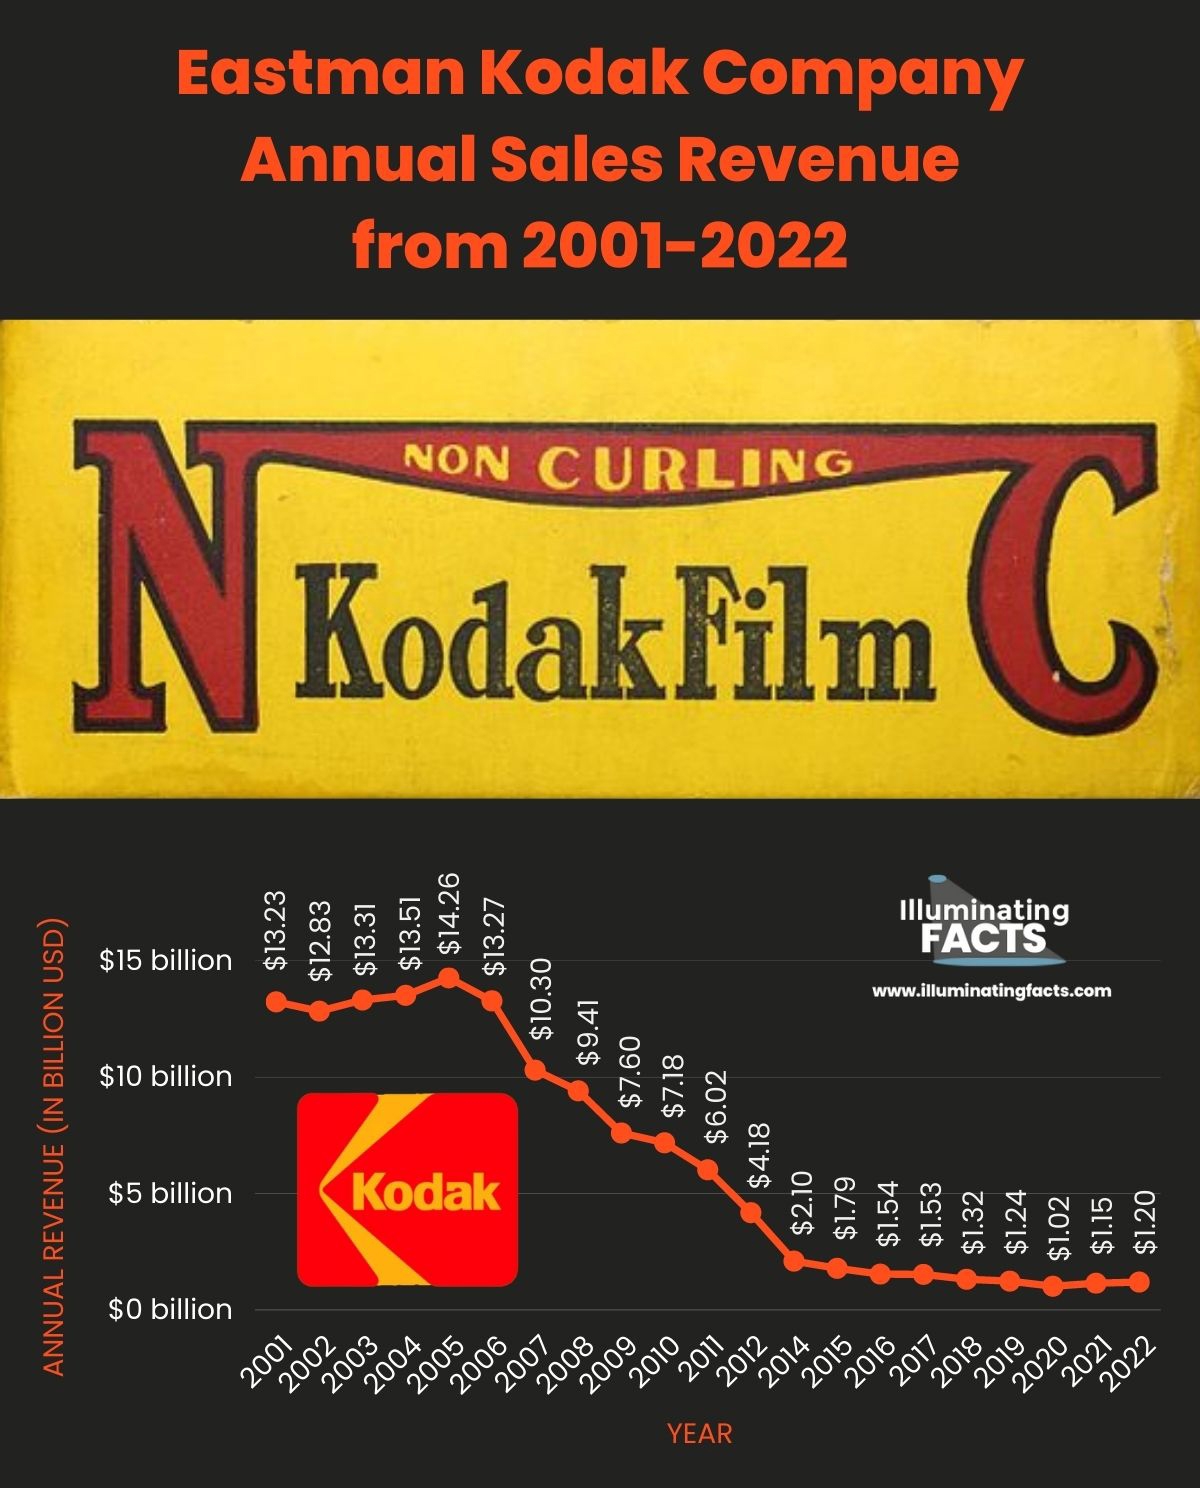 Eastman Kodak Company Annual Sales Revenue from 2001-2022